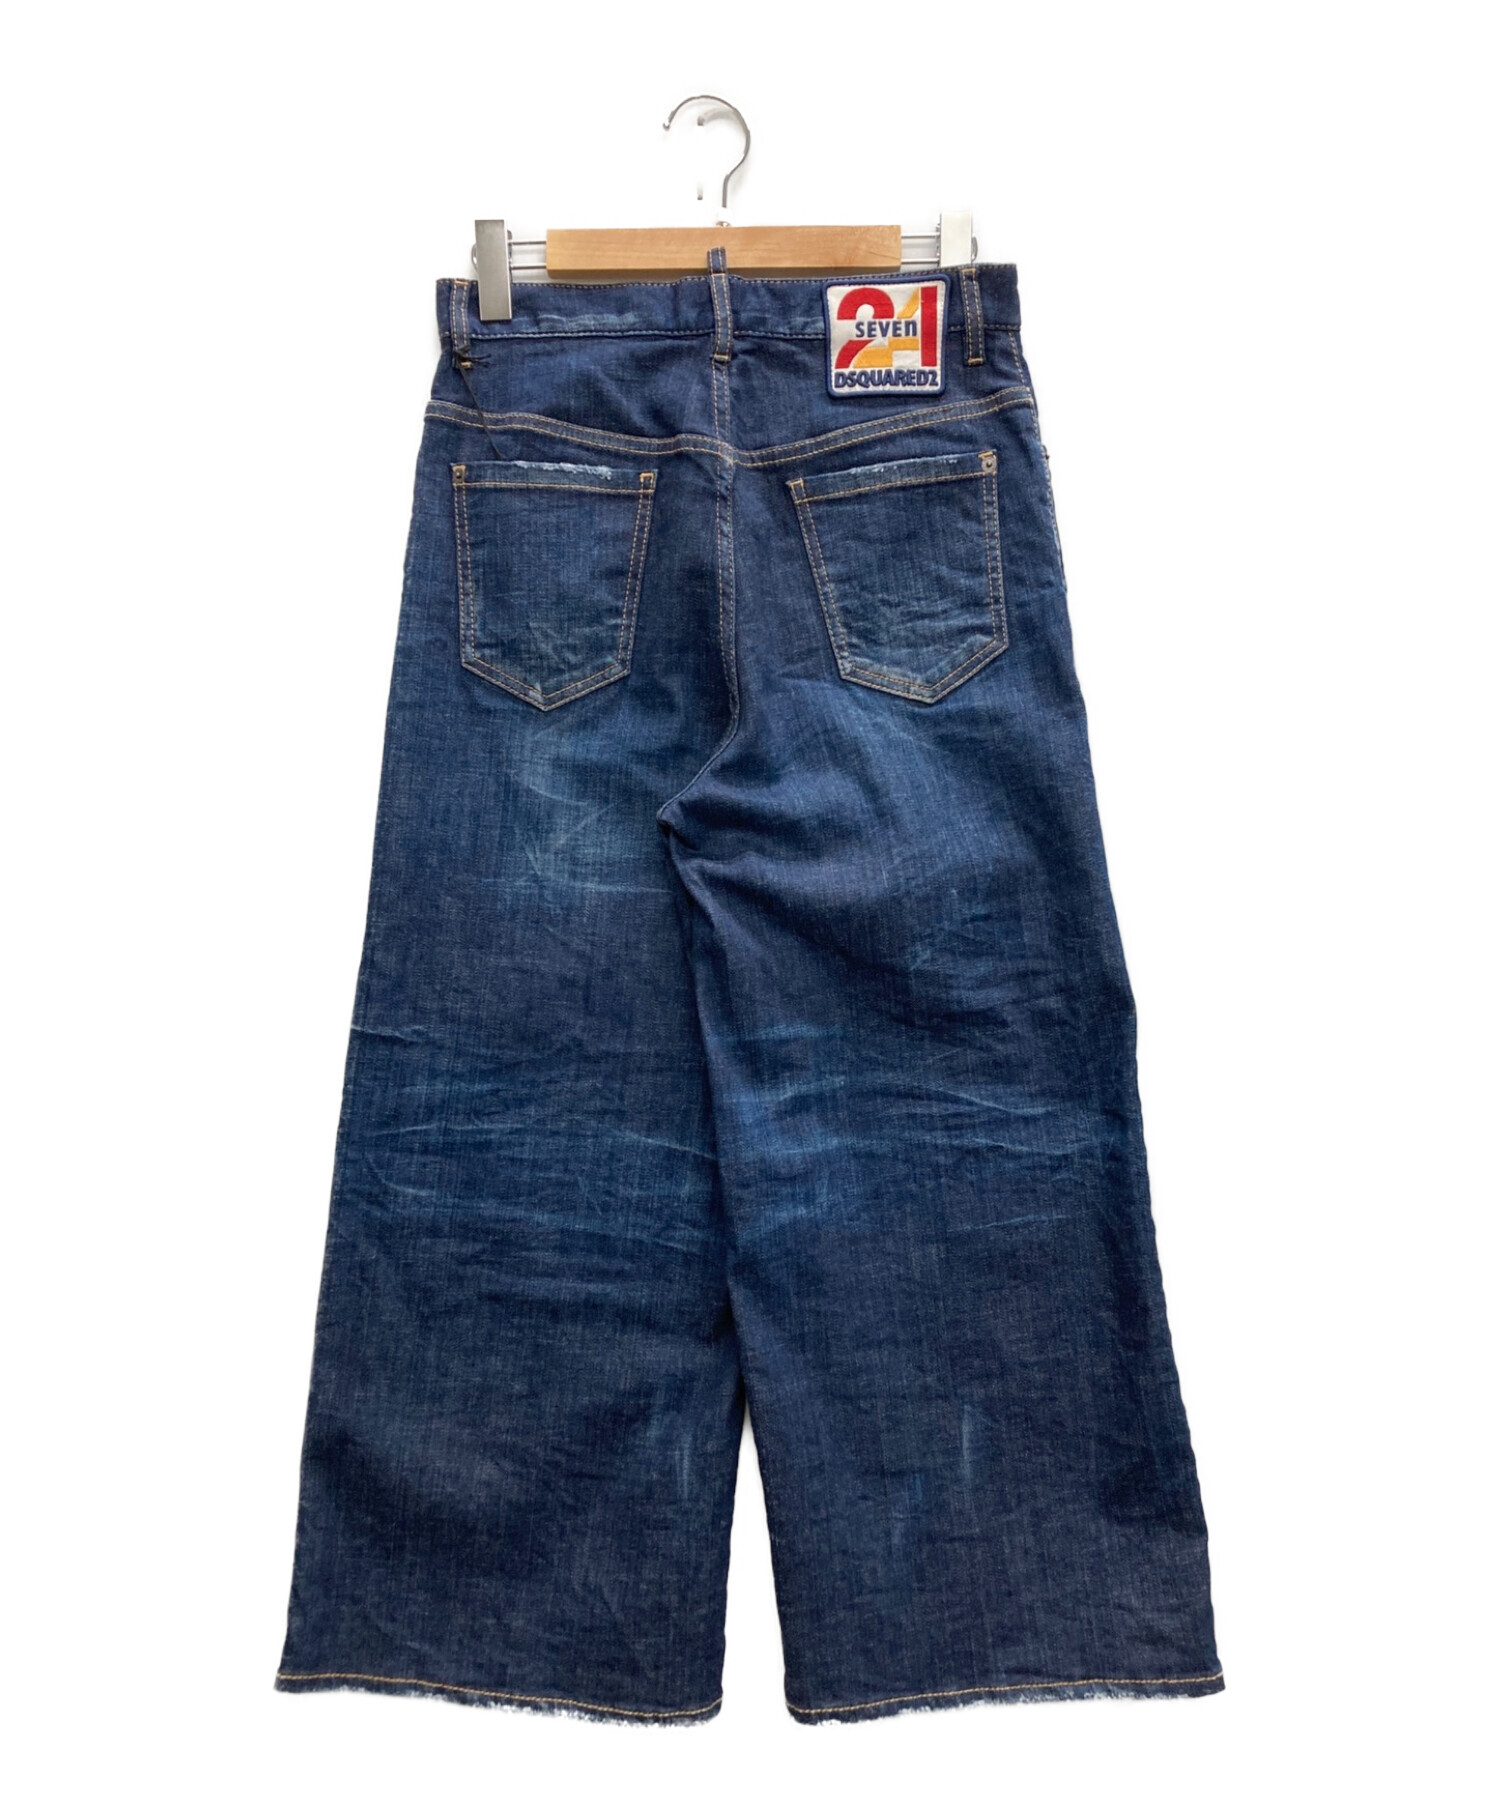 DSQUARED2 (ディースクエアード) DARK CLEAN WASH JINNY Jeans インディゴ サイズ:SIZE 34